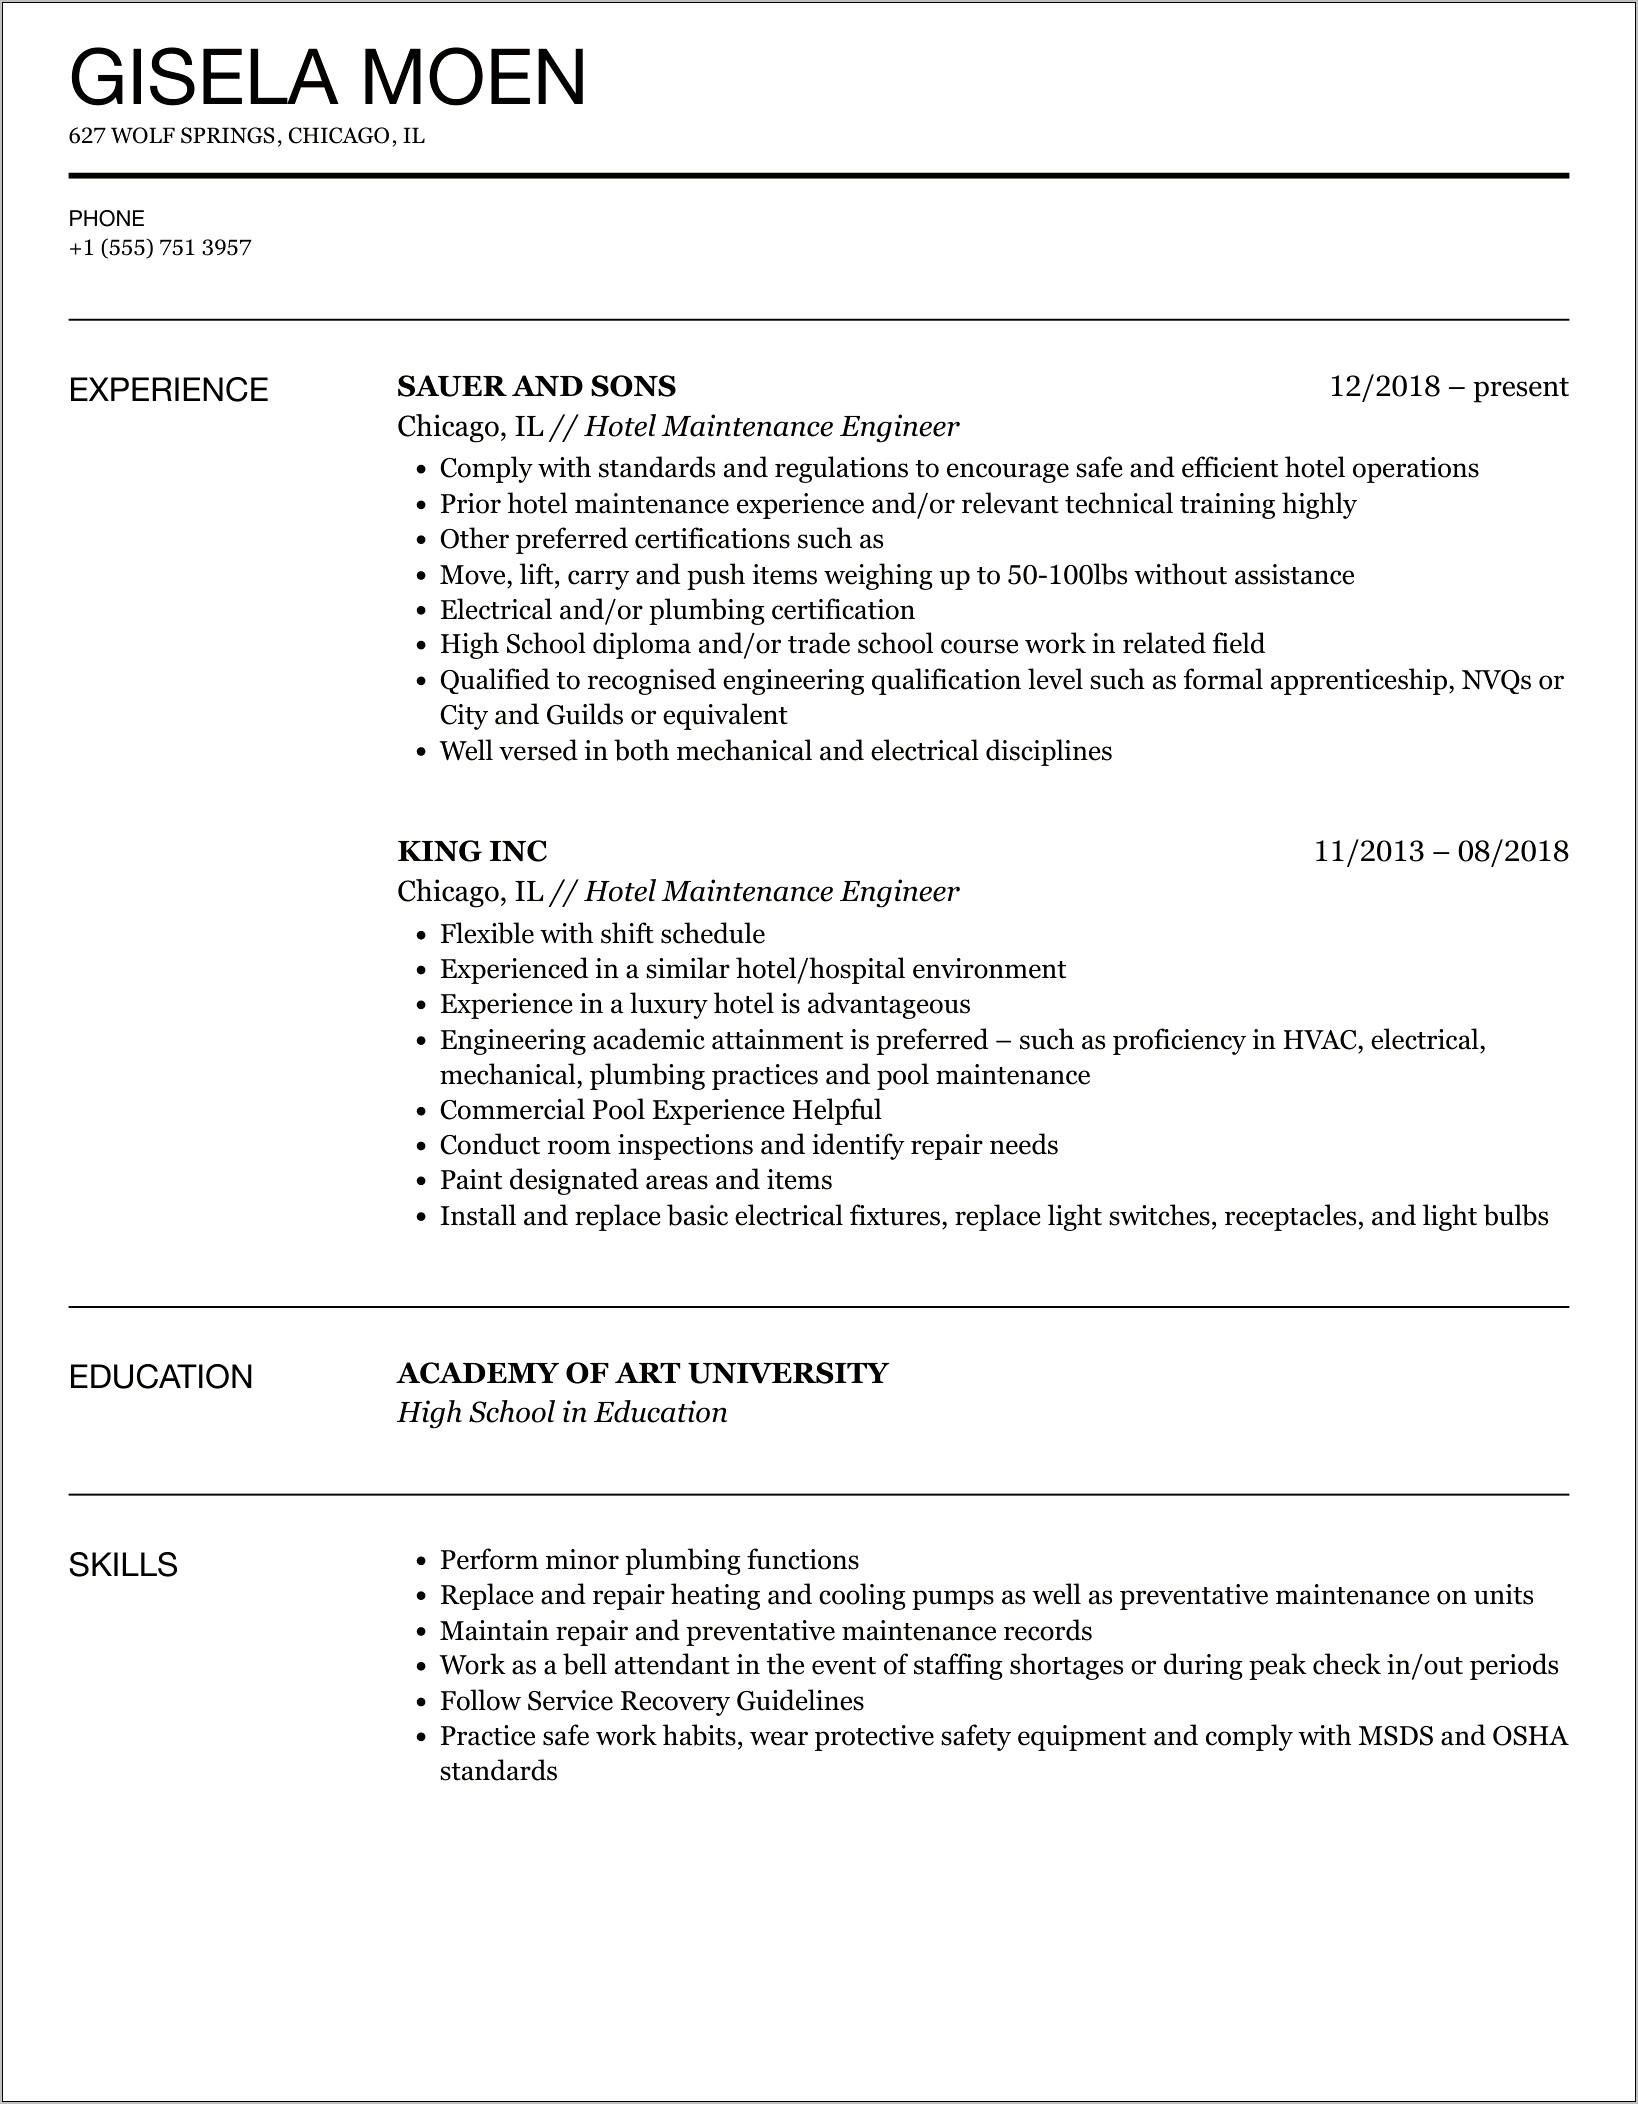 Sample Resume For Hotel Engineer